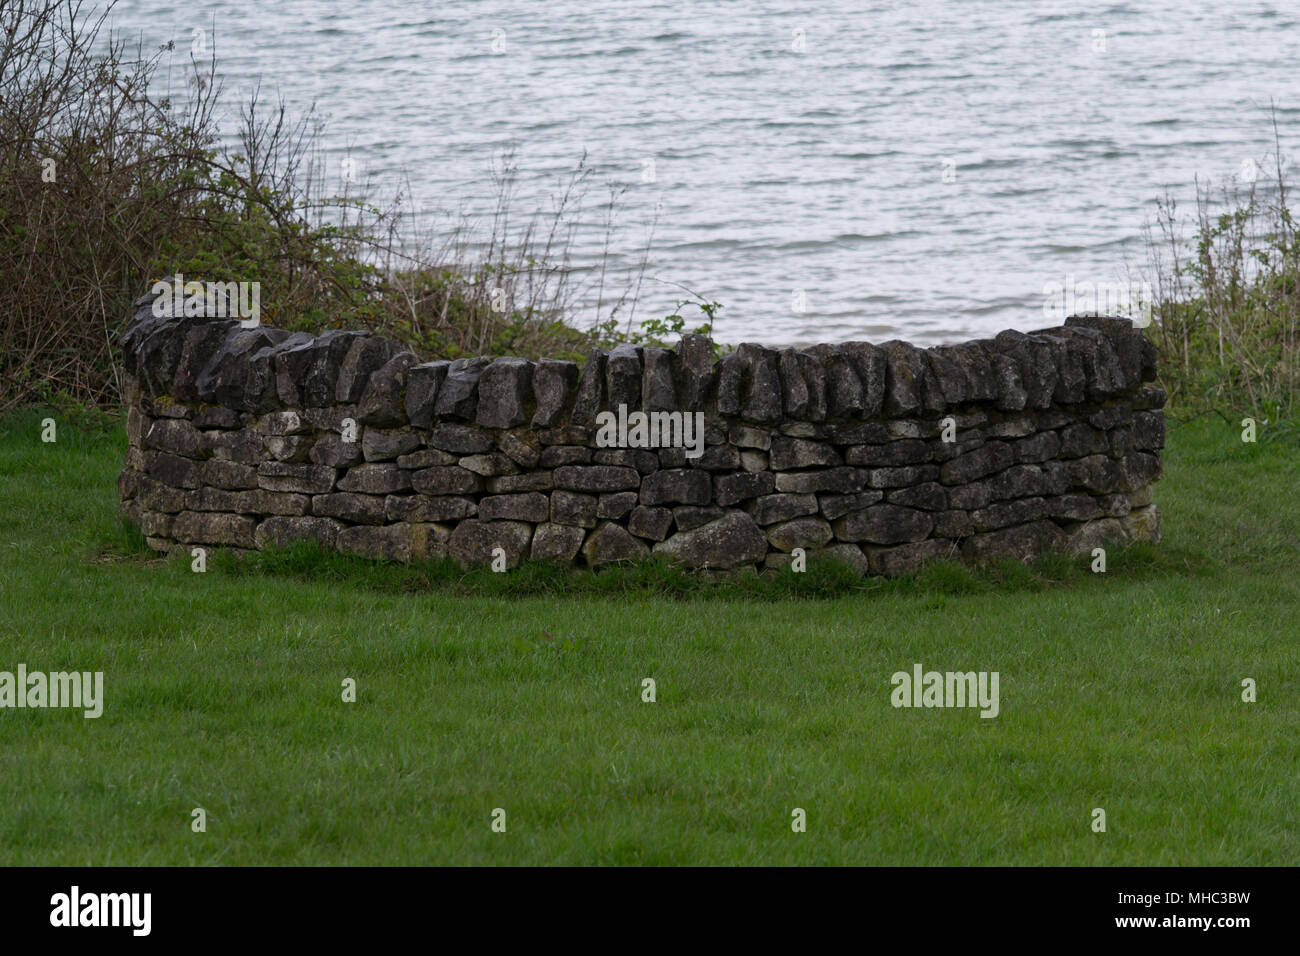 Una secca curva a muro in pietra in erba in prossimità di acqua Foto Stock